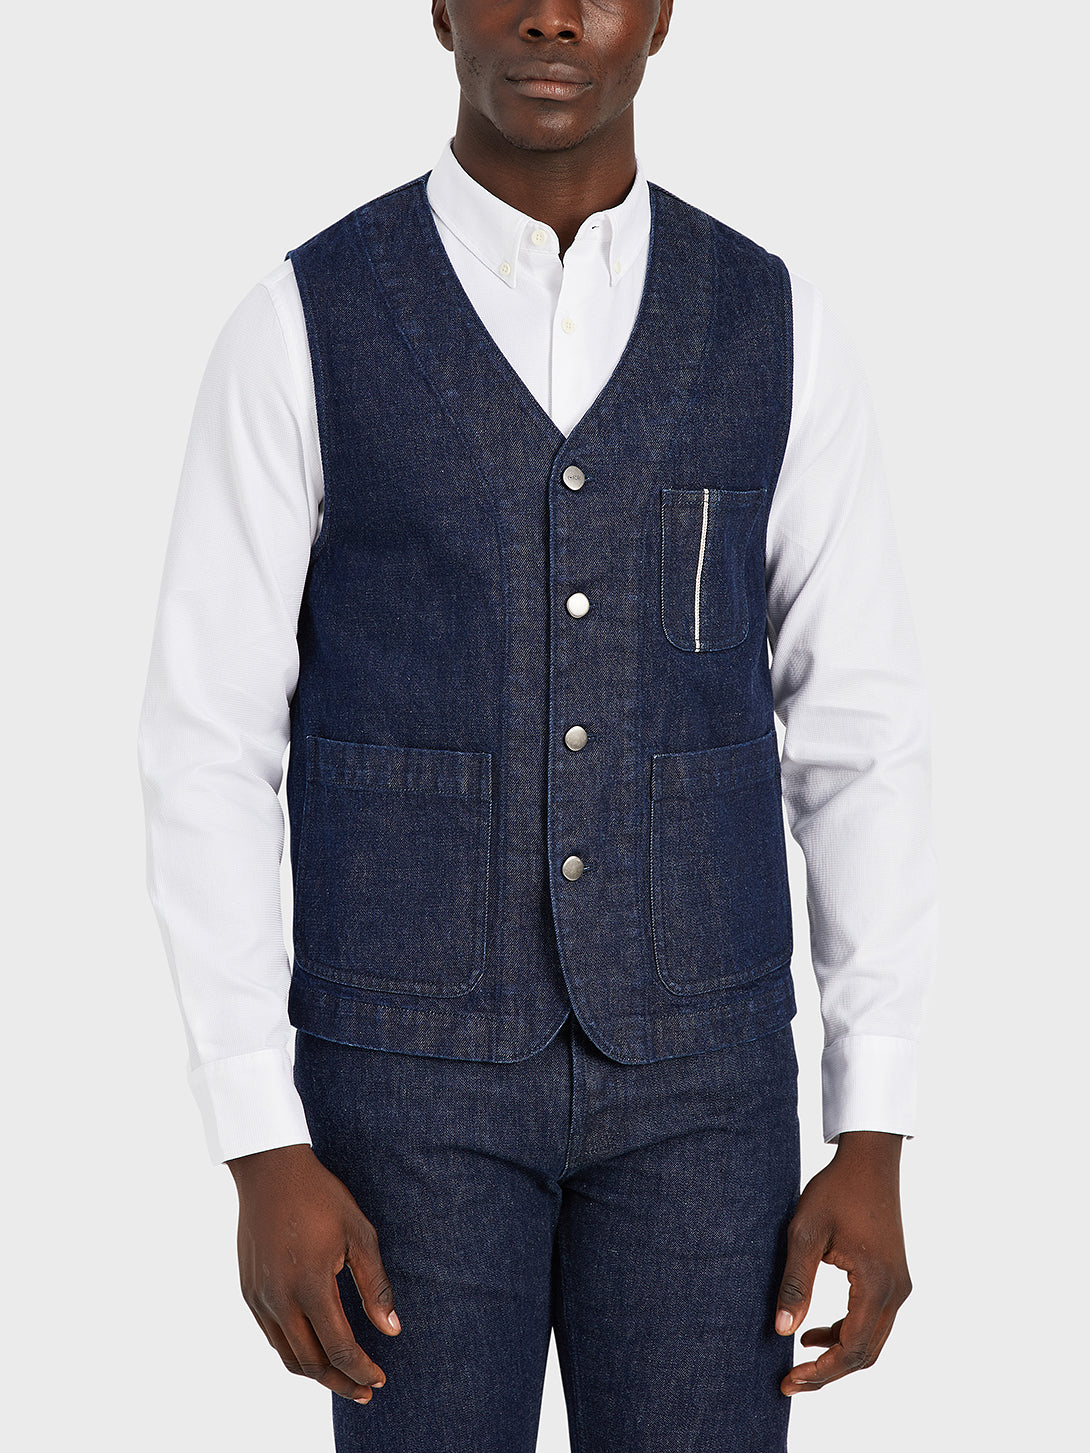 ONS Clothing Men's vest in DK INDIGO